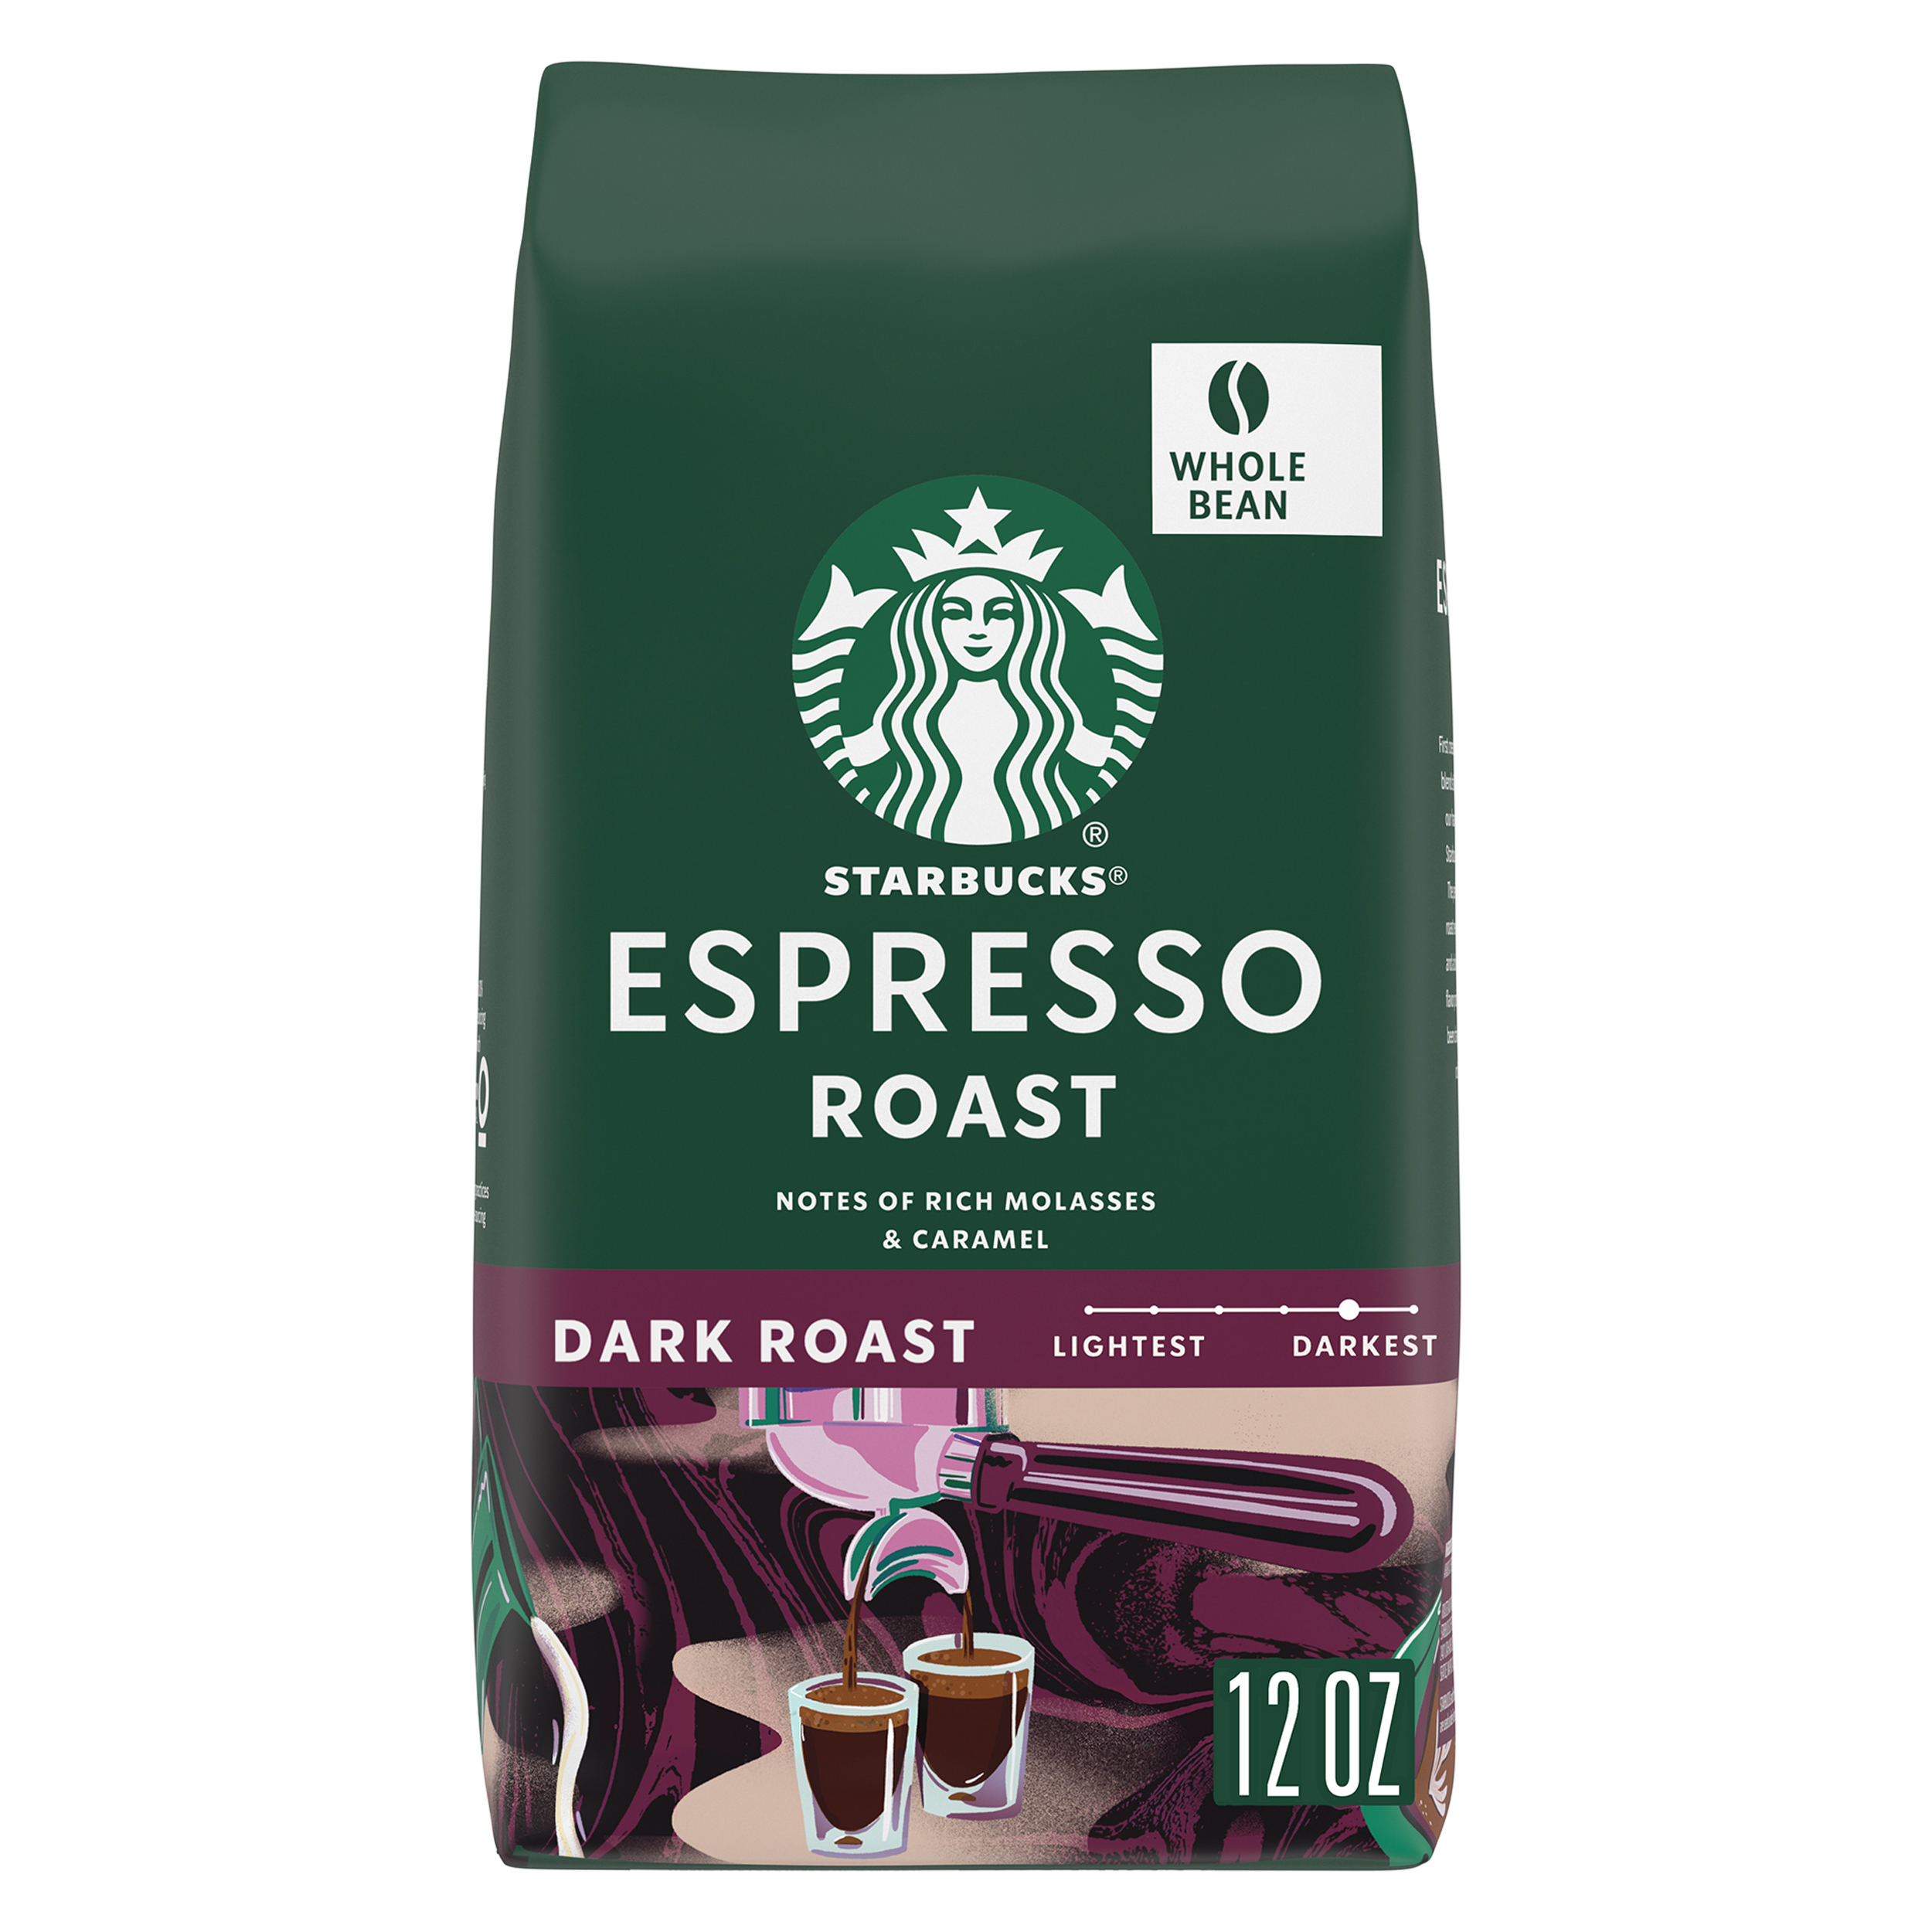 Starbucks Espresso Roast, Dark Roast Whole Bean Coffee, 100% Arabica, 12 oz - image 1 of 8